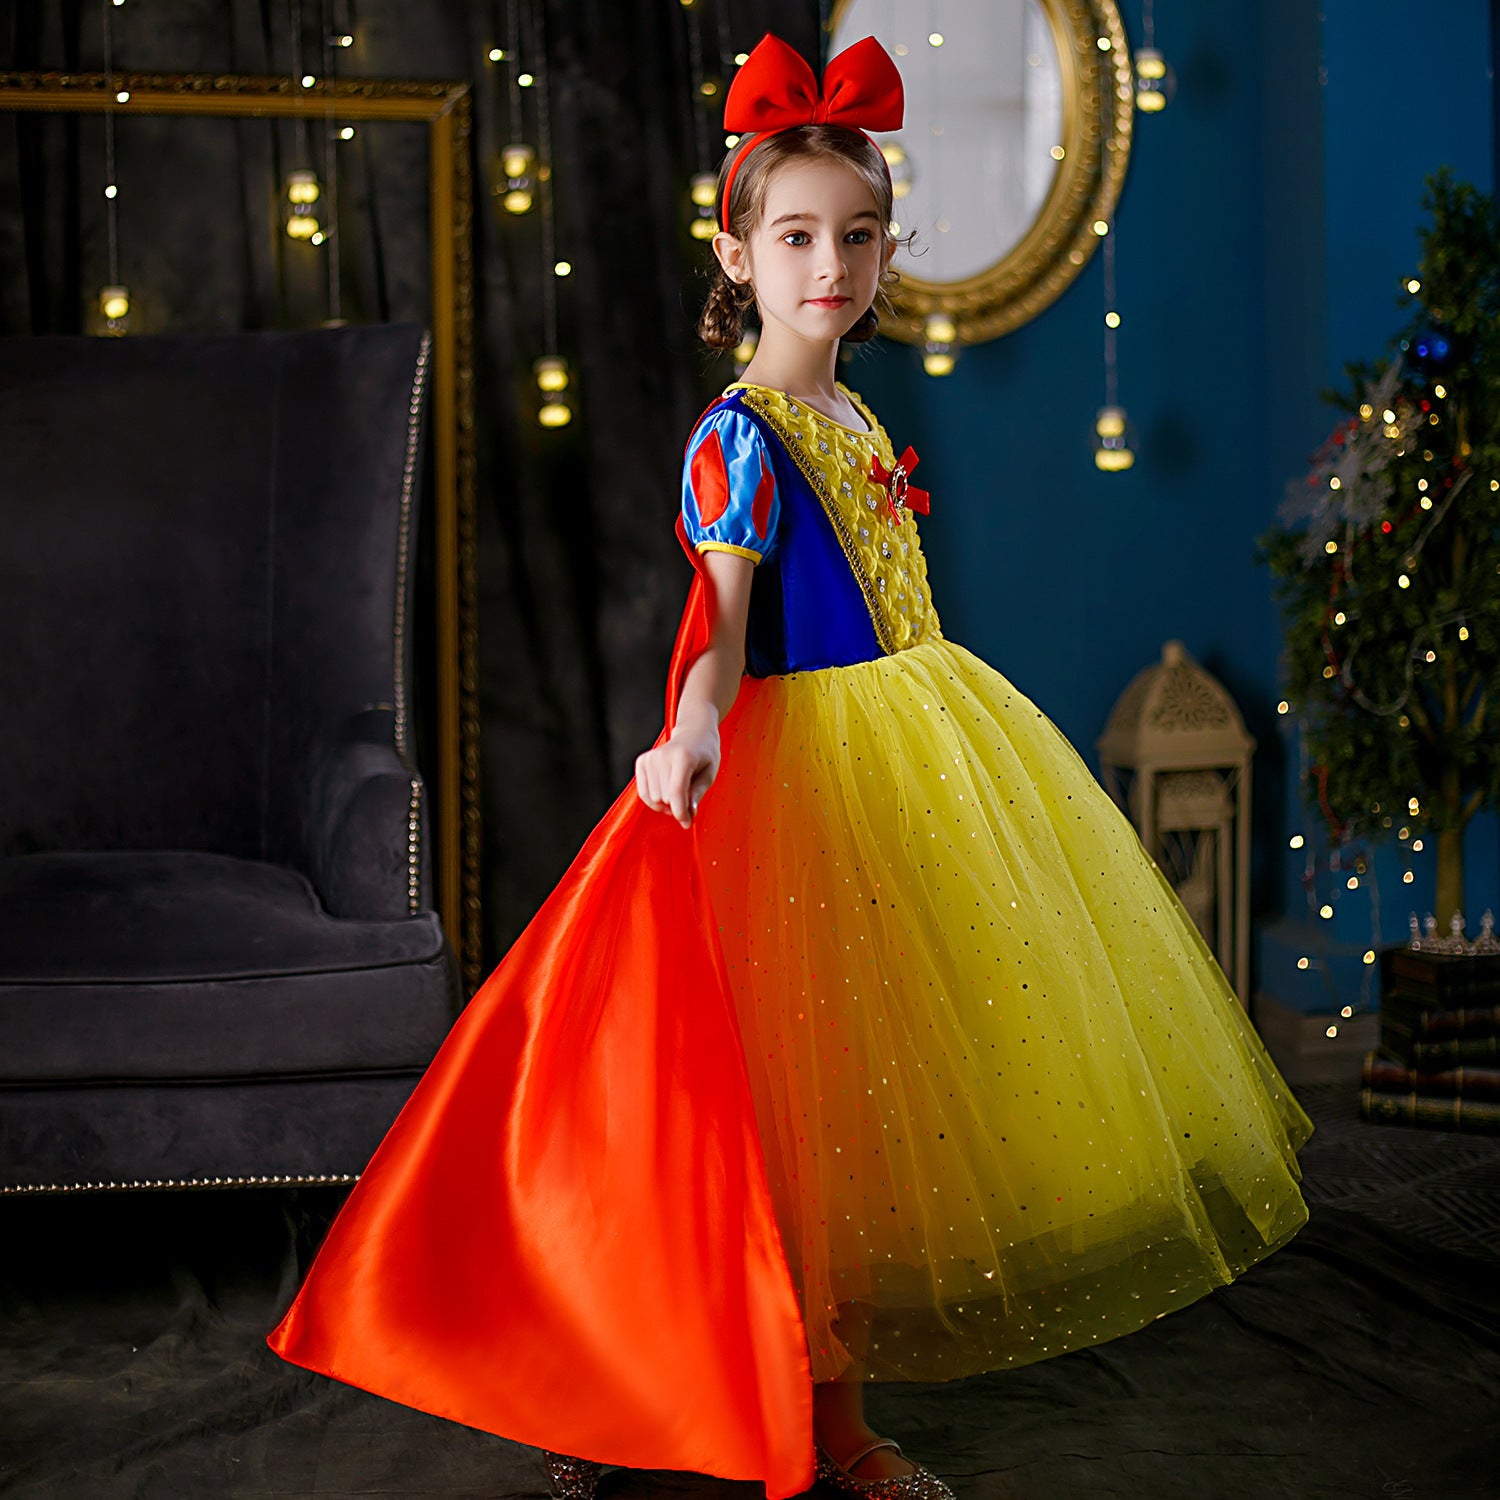 Snow White Photo Shoot Princess Dress Gown